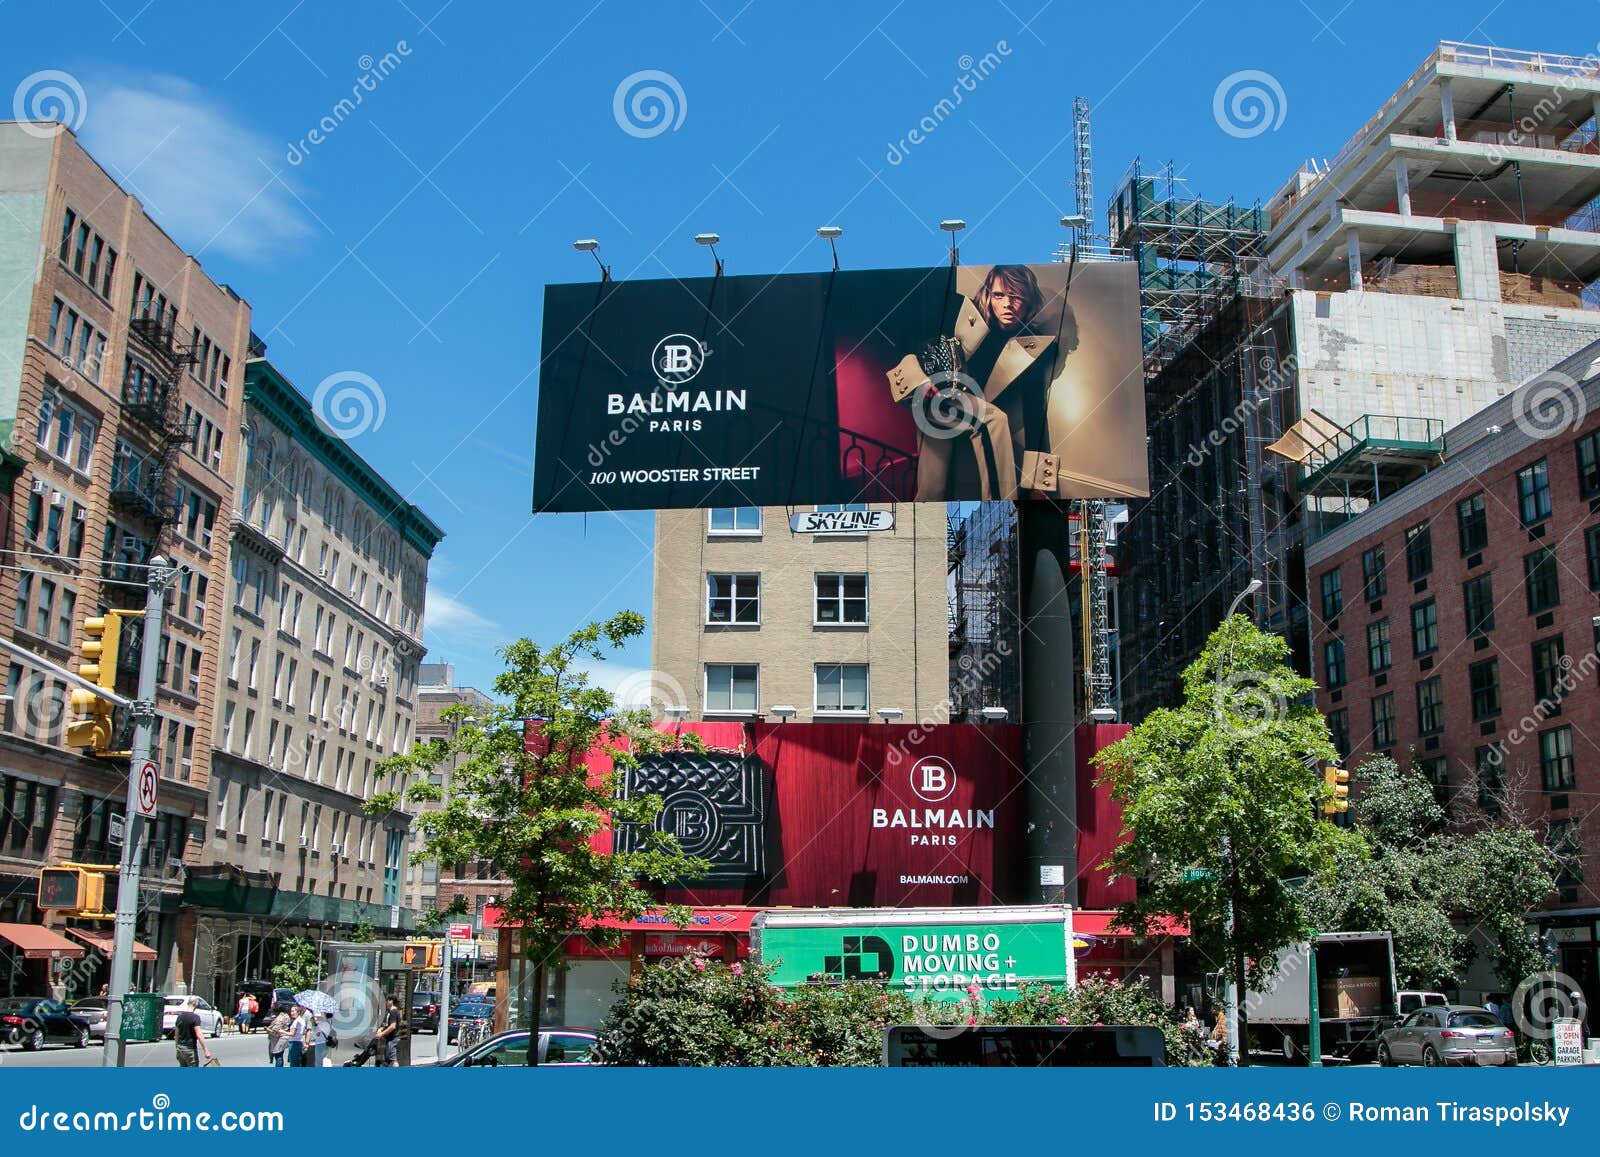 hver gang strejke Mathis Balmain store billboards editorial photo. Image of york - 153468436